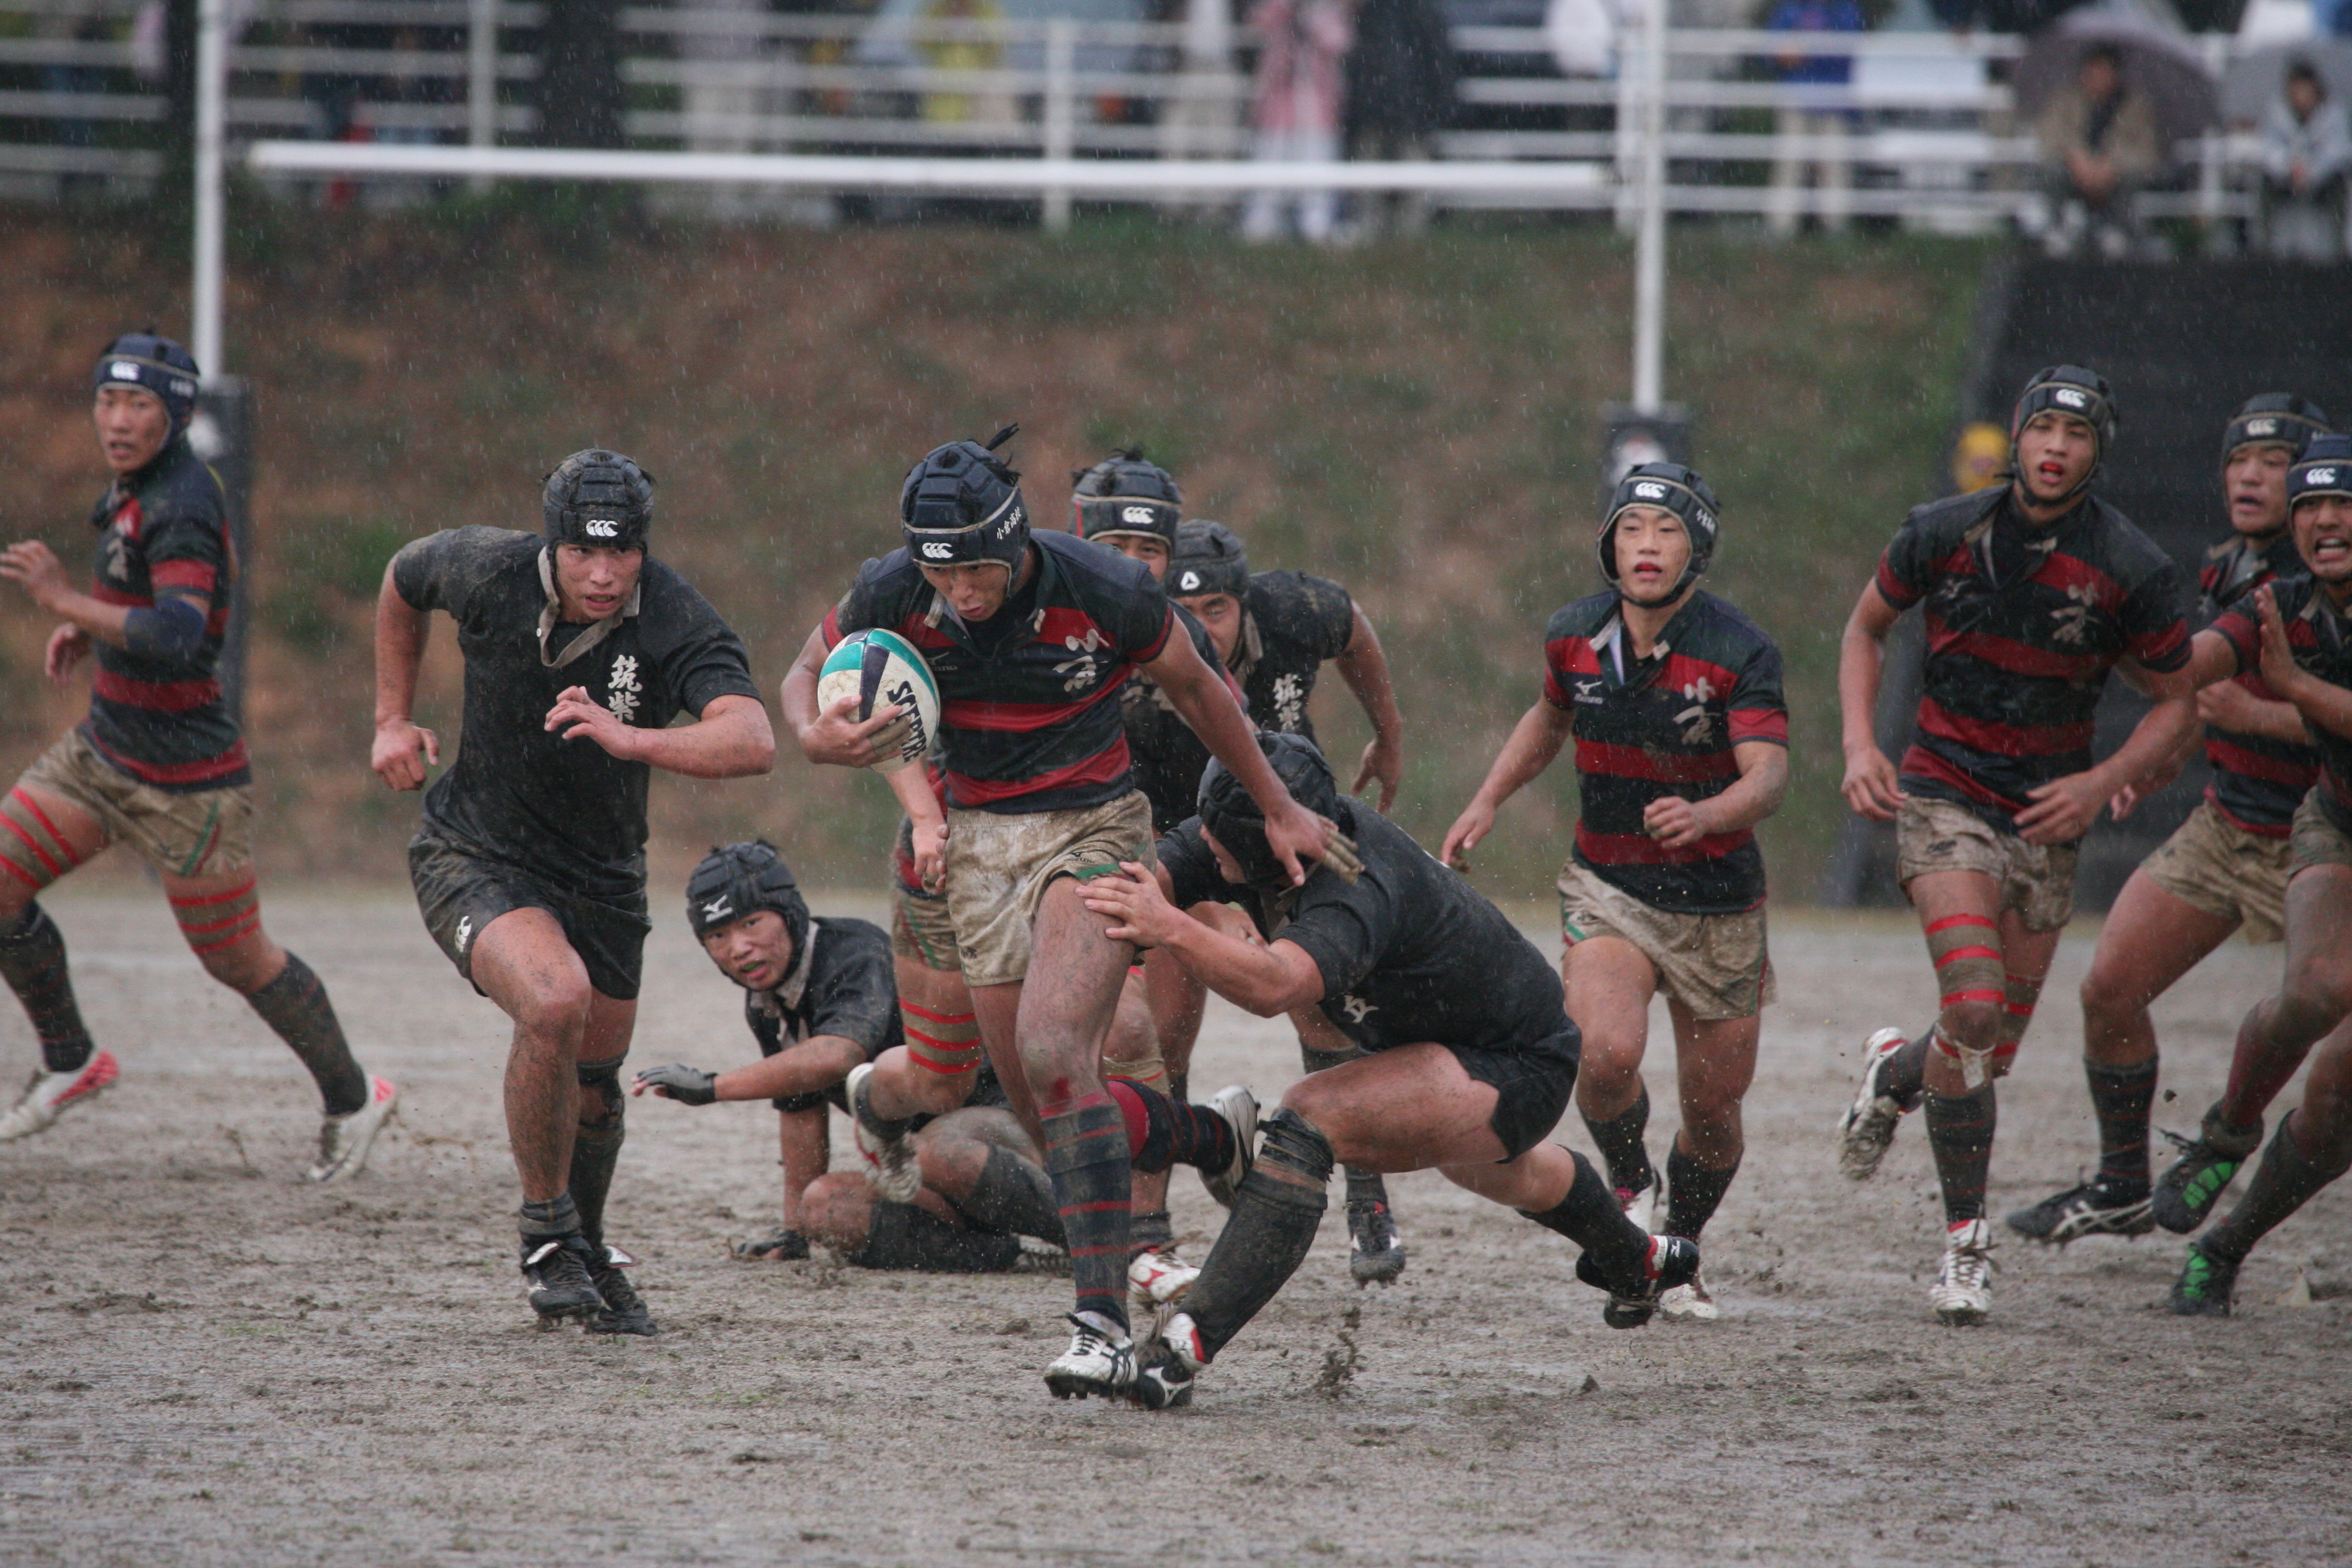 http://kokura-rugby.sakura.ne.jp/2011.10-30-18.JPG